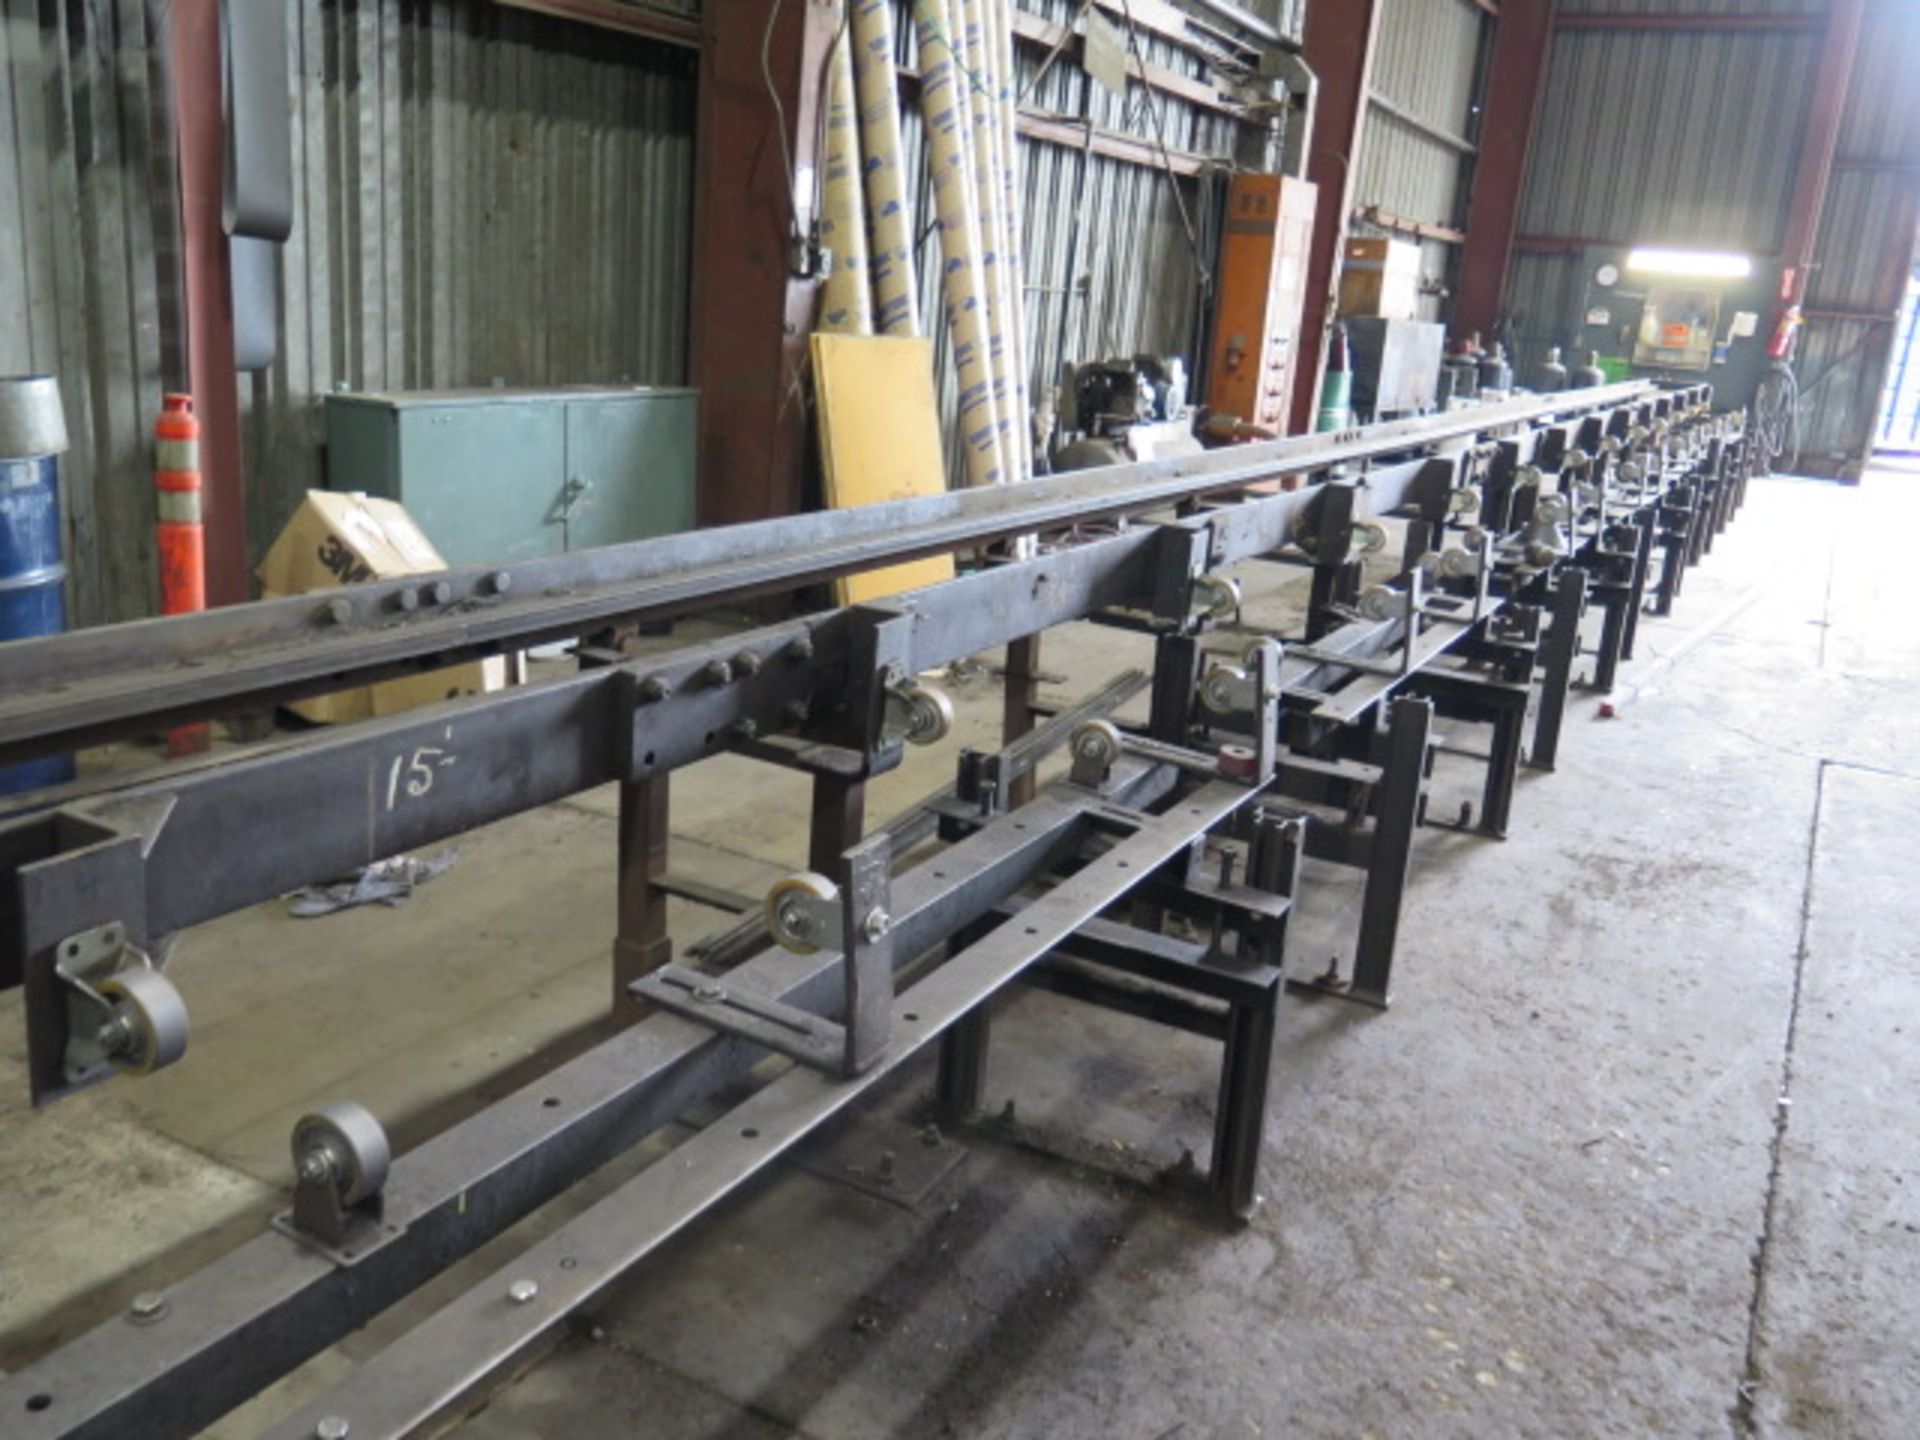 Production Machine Co Custom 6” Belt Sander / Tube Finishing Machine. (SOLD AS-IS - NO WARRANTY) - Image 14 of 16